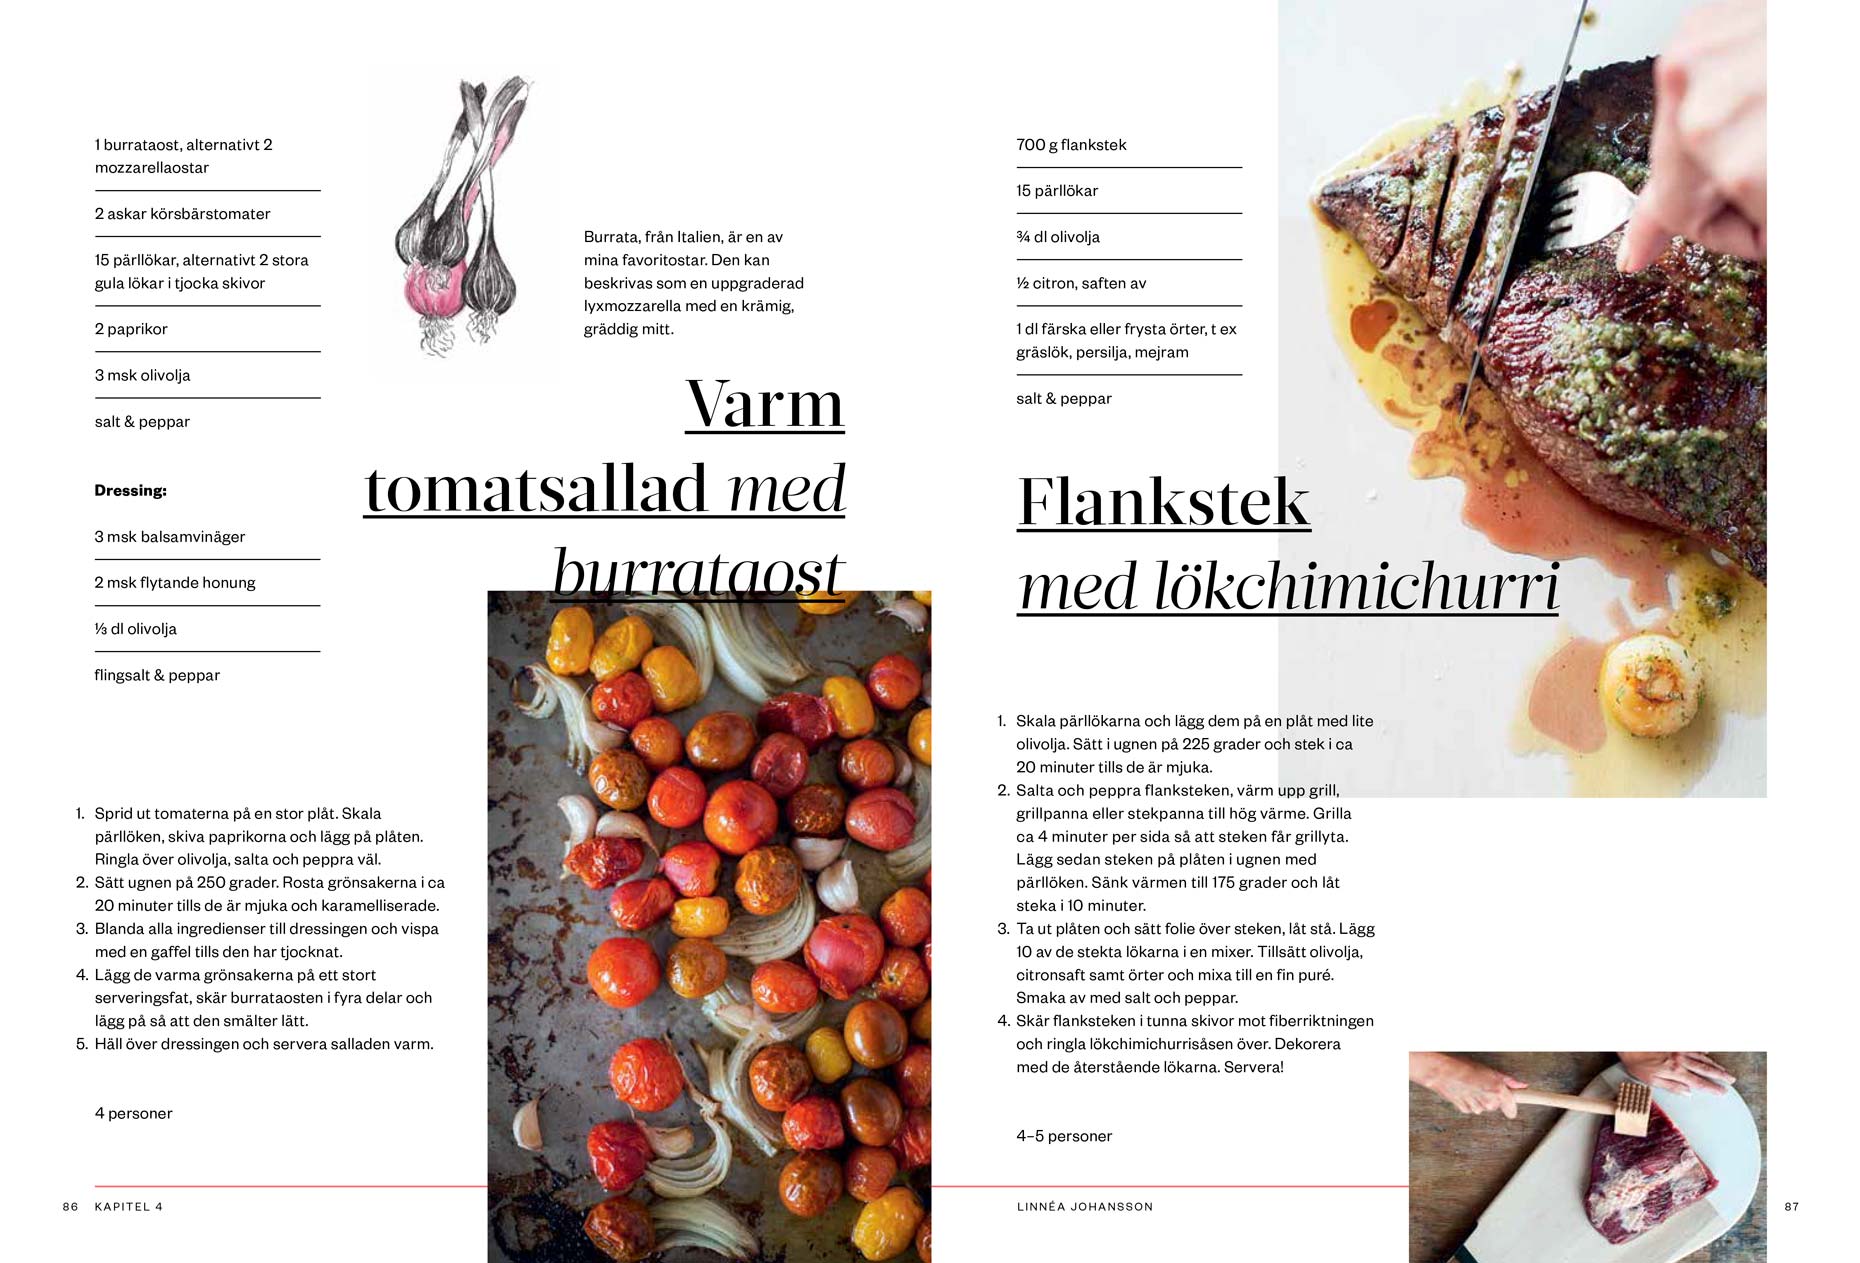 adrianmueller_cookbook_linneajohansson_011